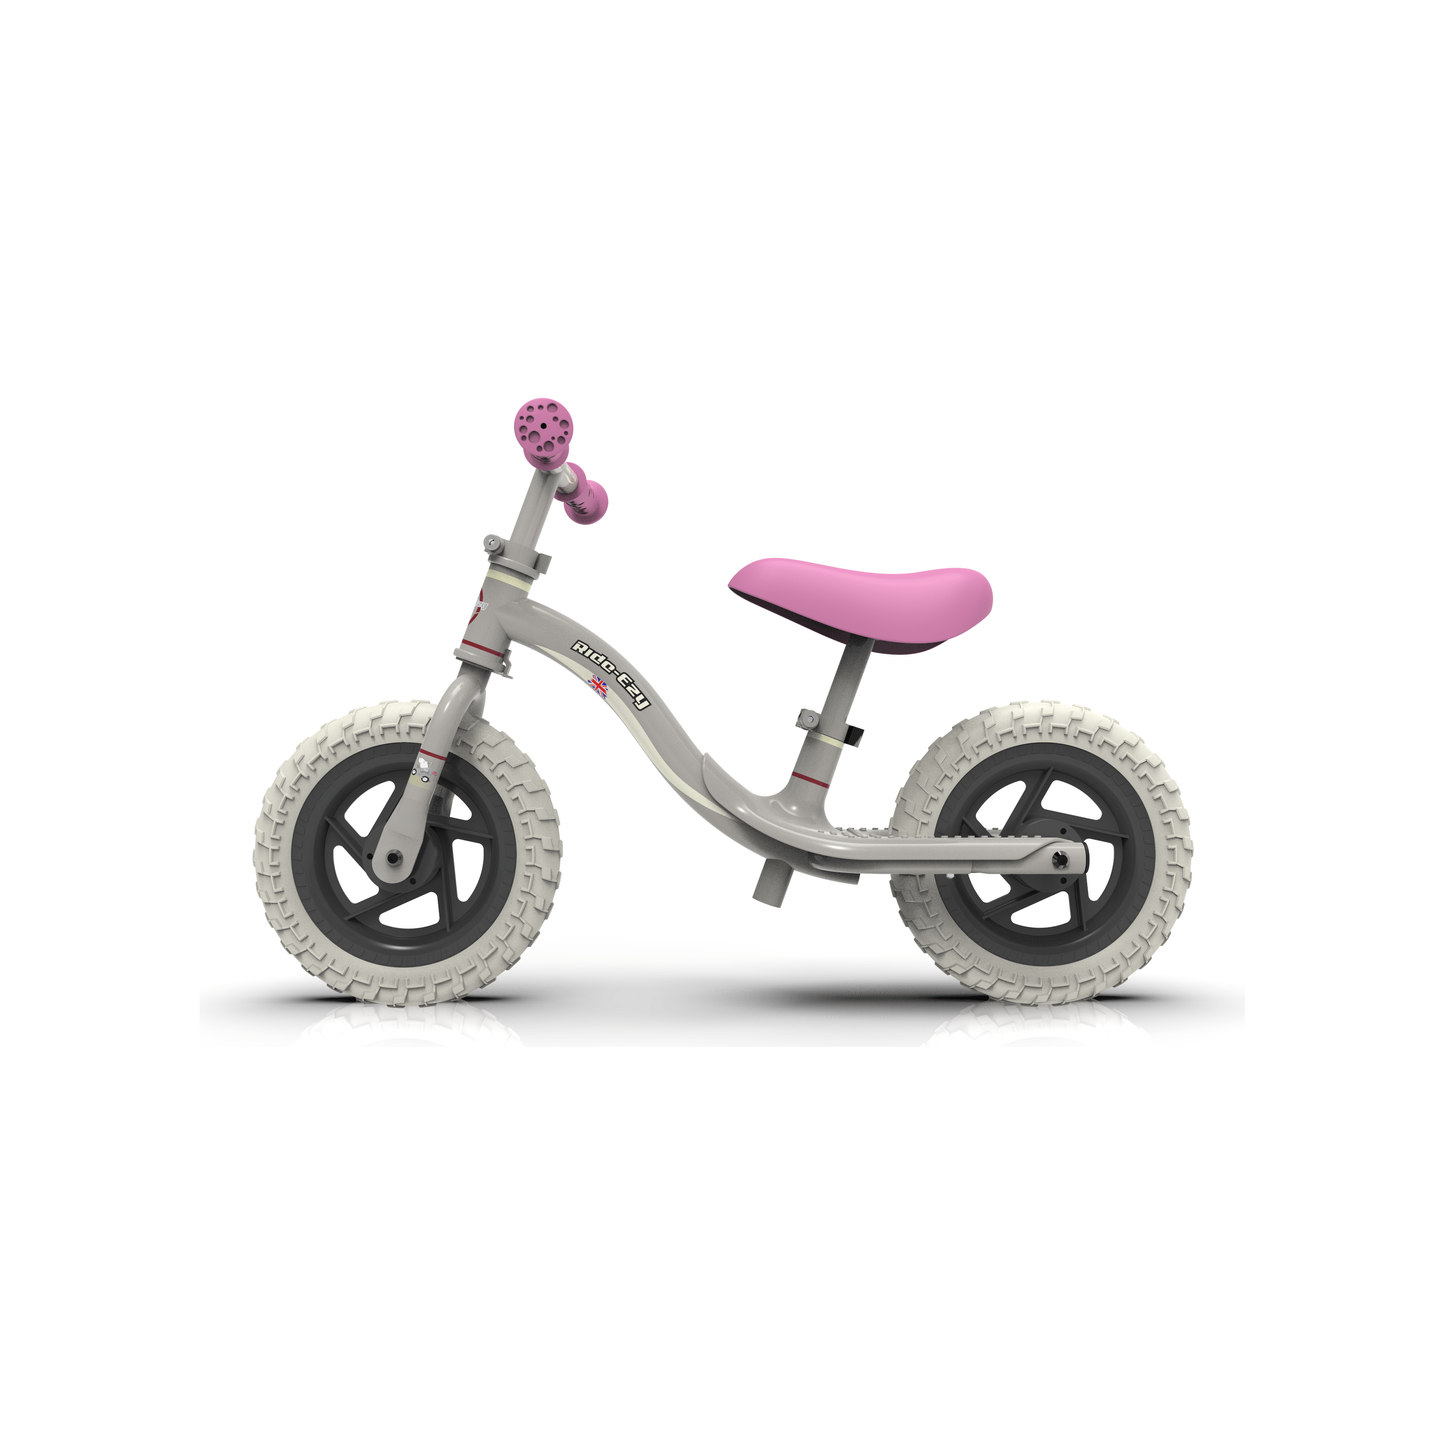 Ride-Ezy Go Balance Bike - Pink & Silver left side